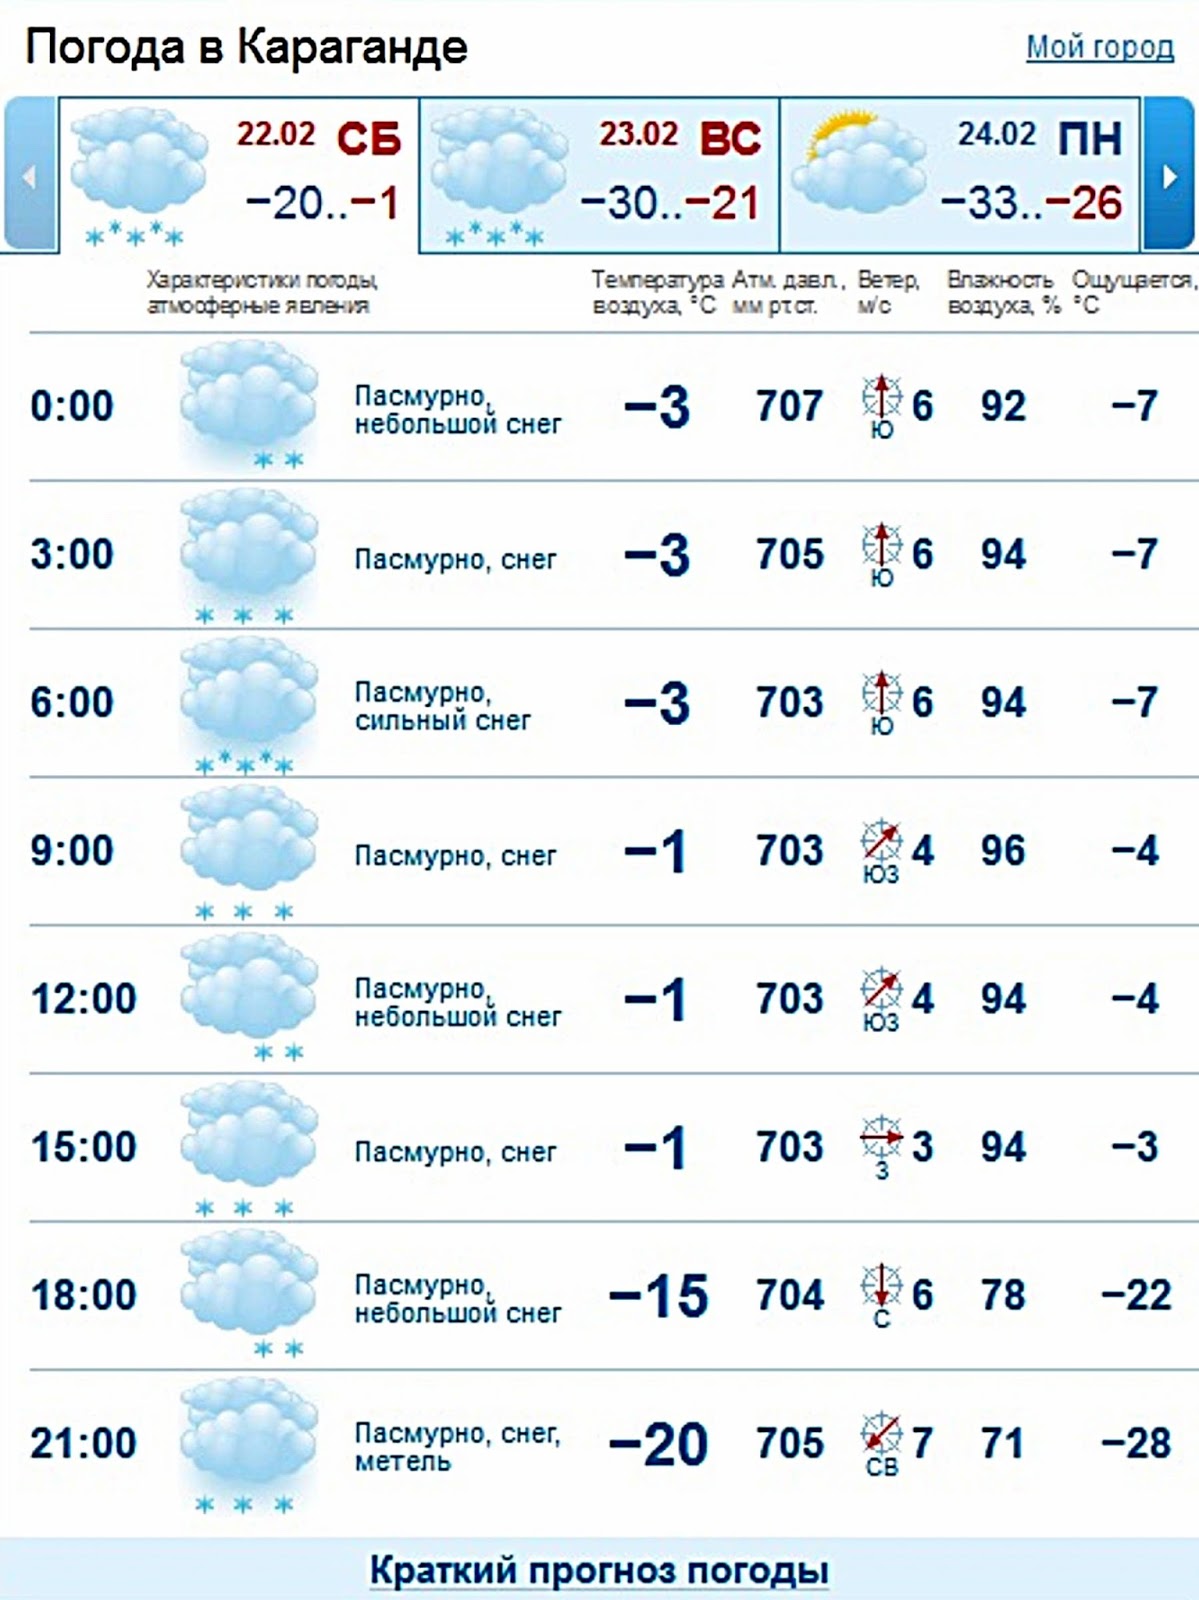 Астана погода какая. Погода в Караганде. Прогноз погоды в Караганде на сегодня. Погода в Караганде сегодня. Погода в Караганде на 10.